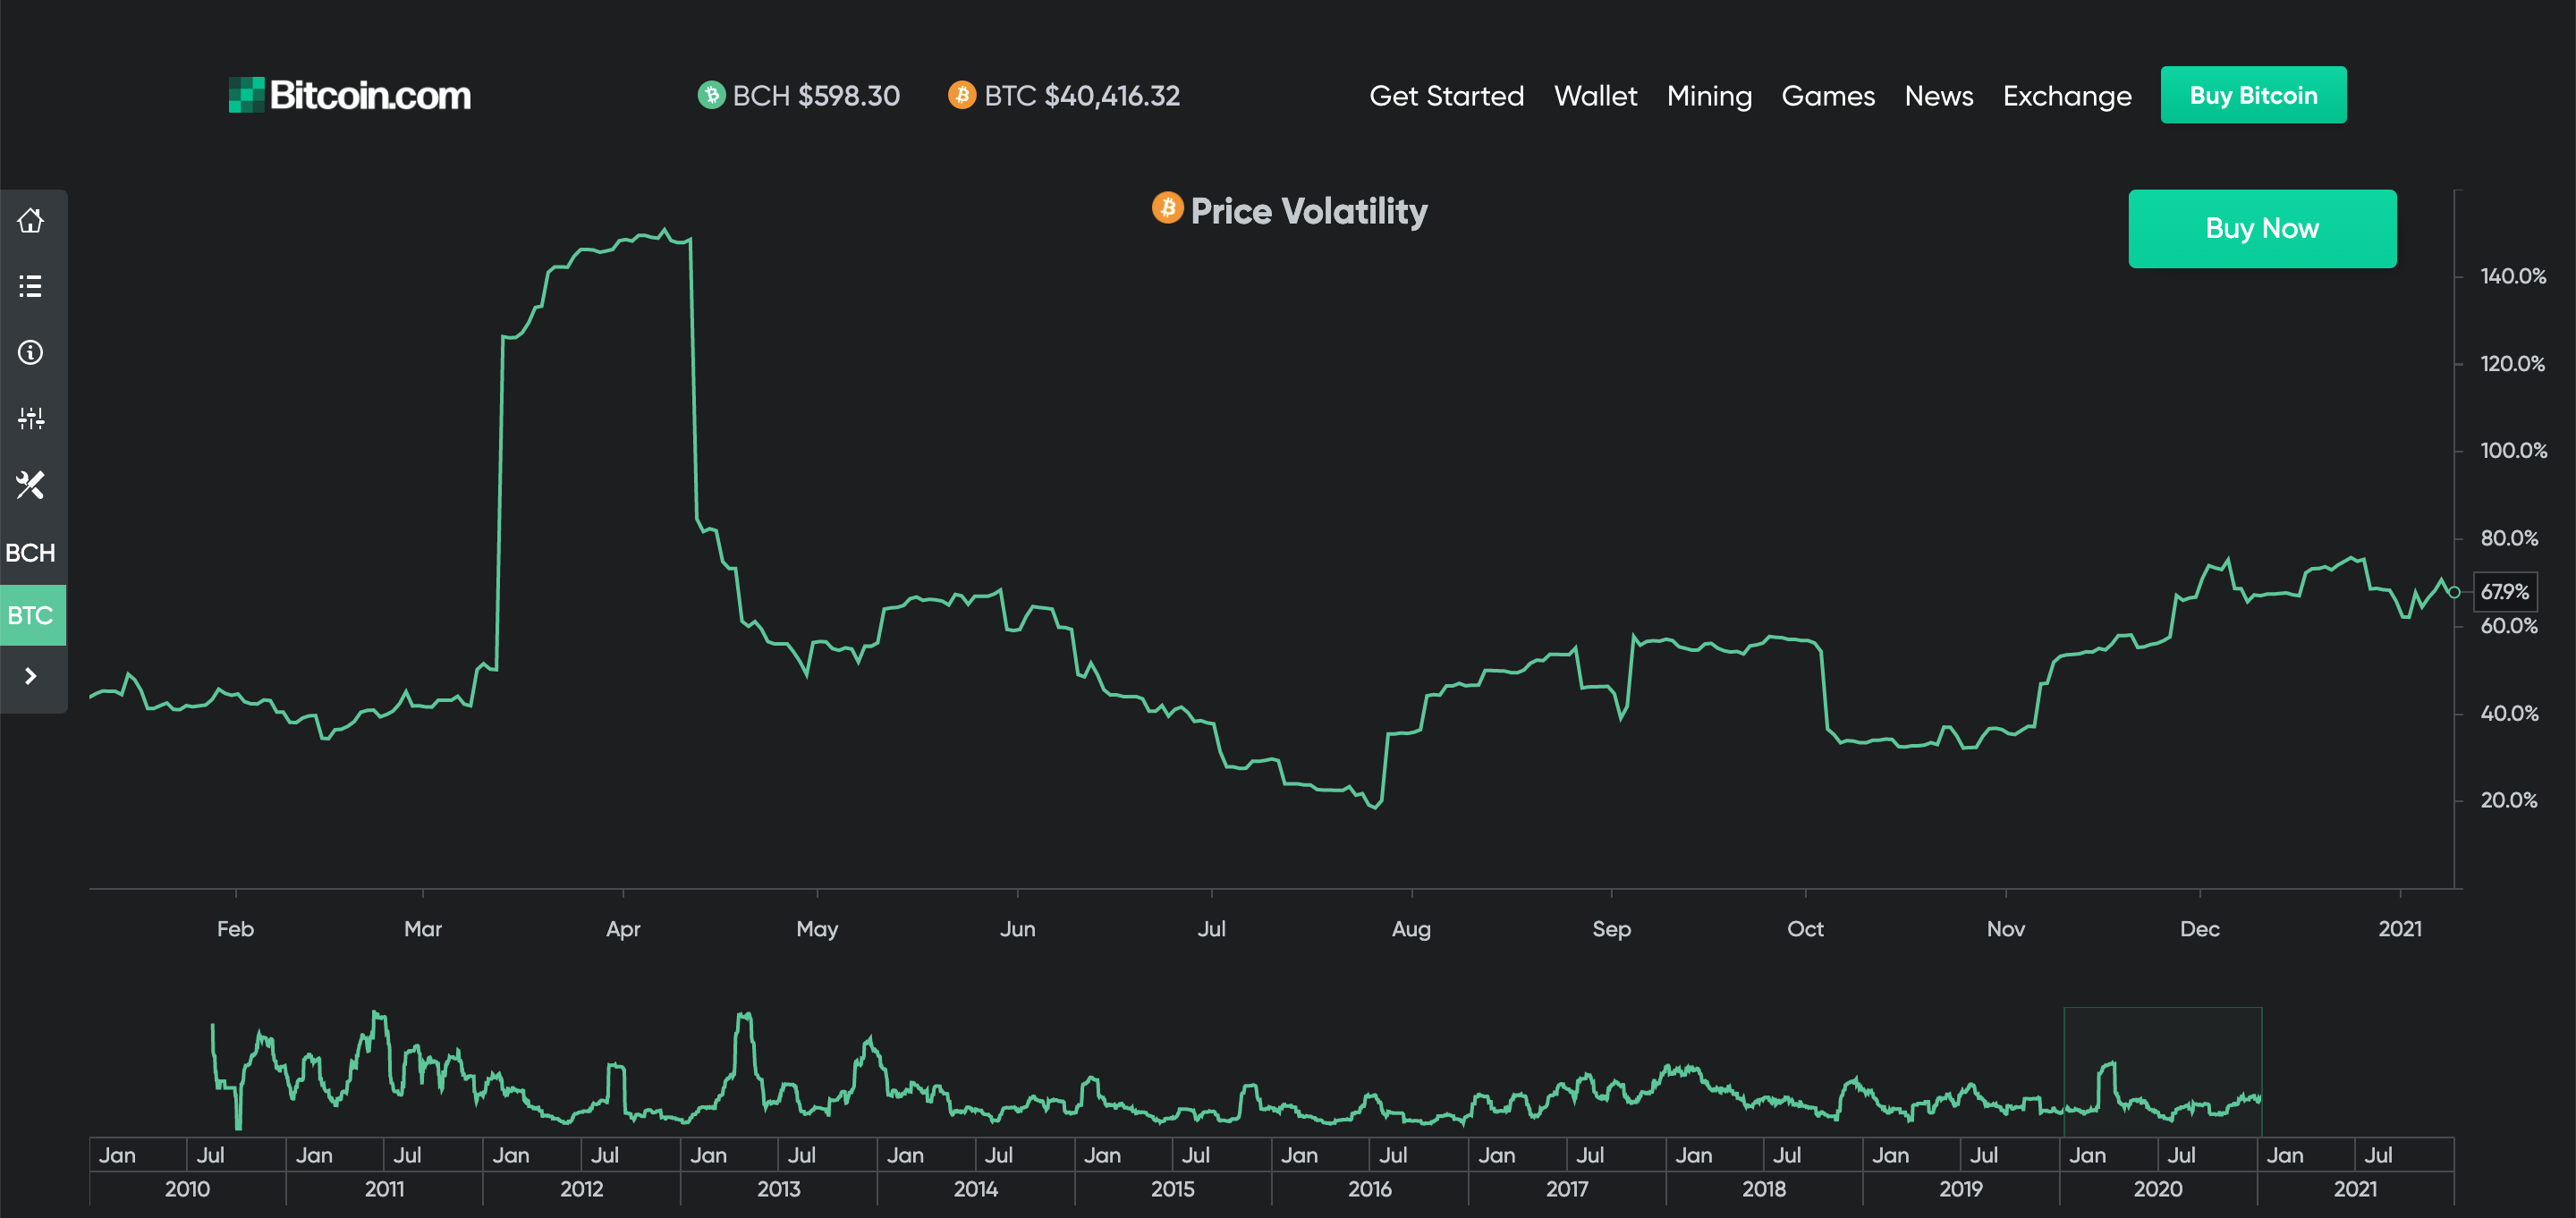 Bitcoin Price Volatility